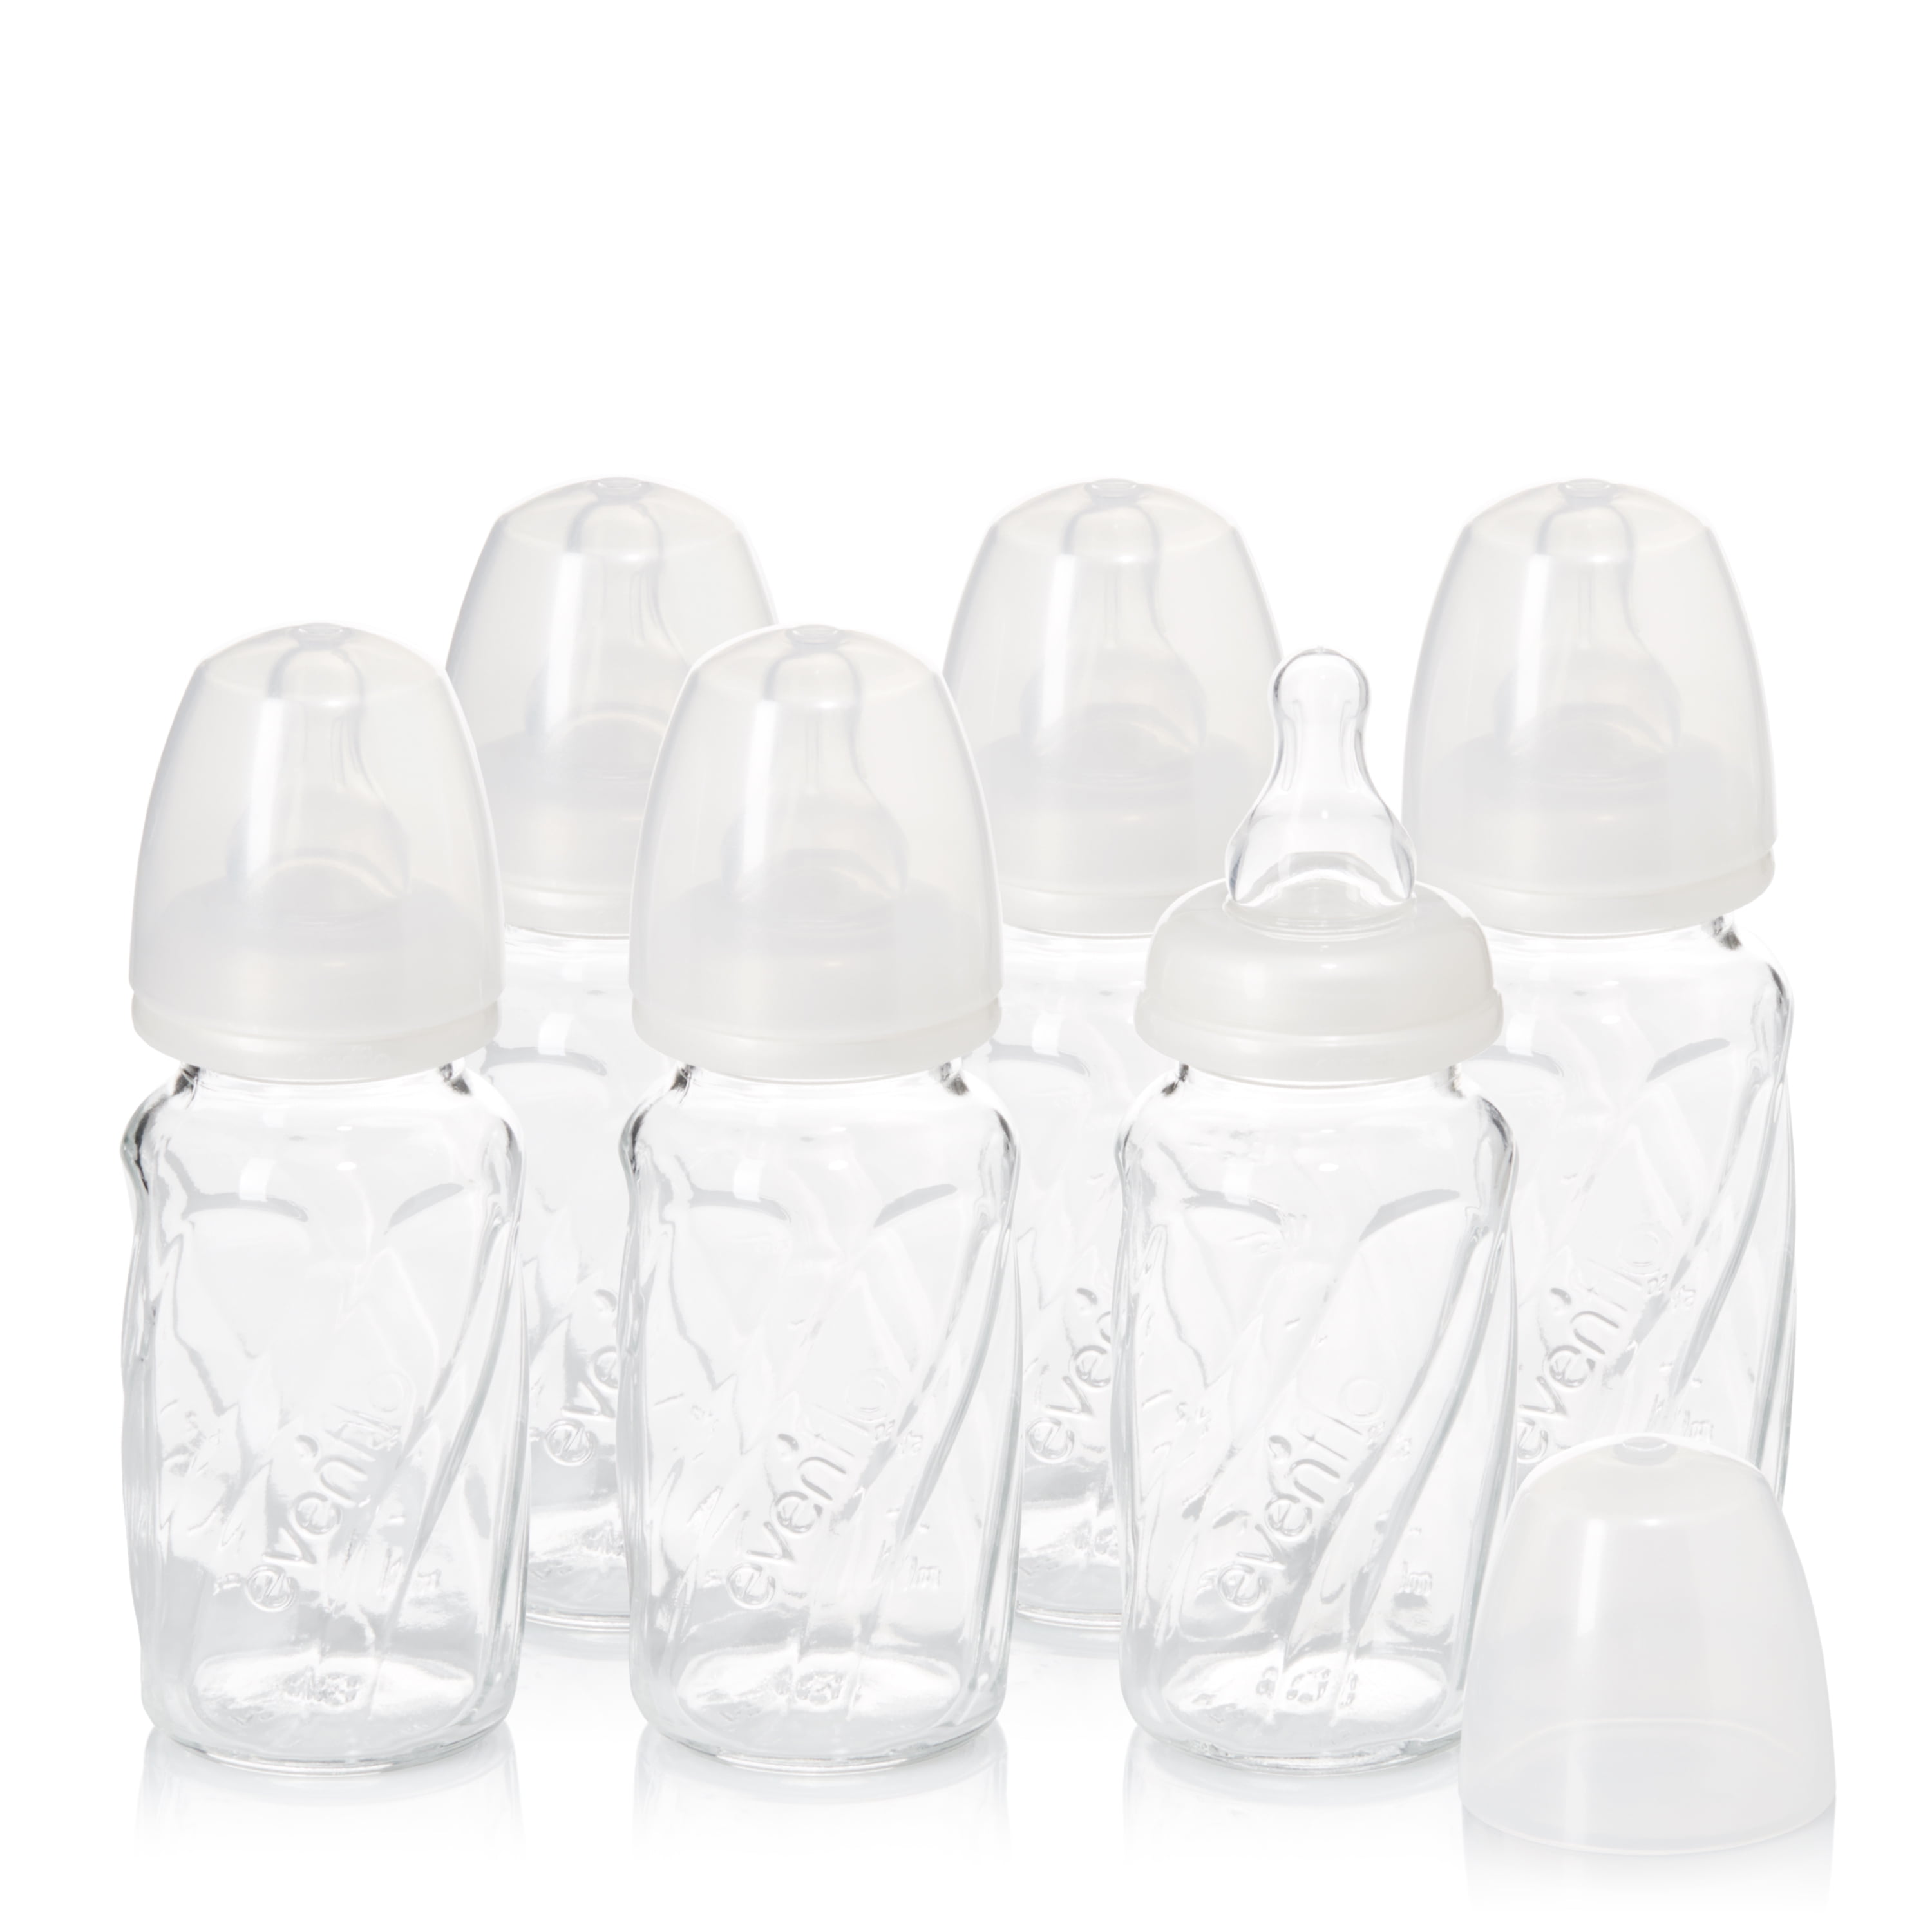 3 Pk Evenflo 4 oz Twist Classic Real Glass Baby Bottles BPA Free NEW 